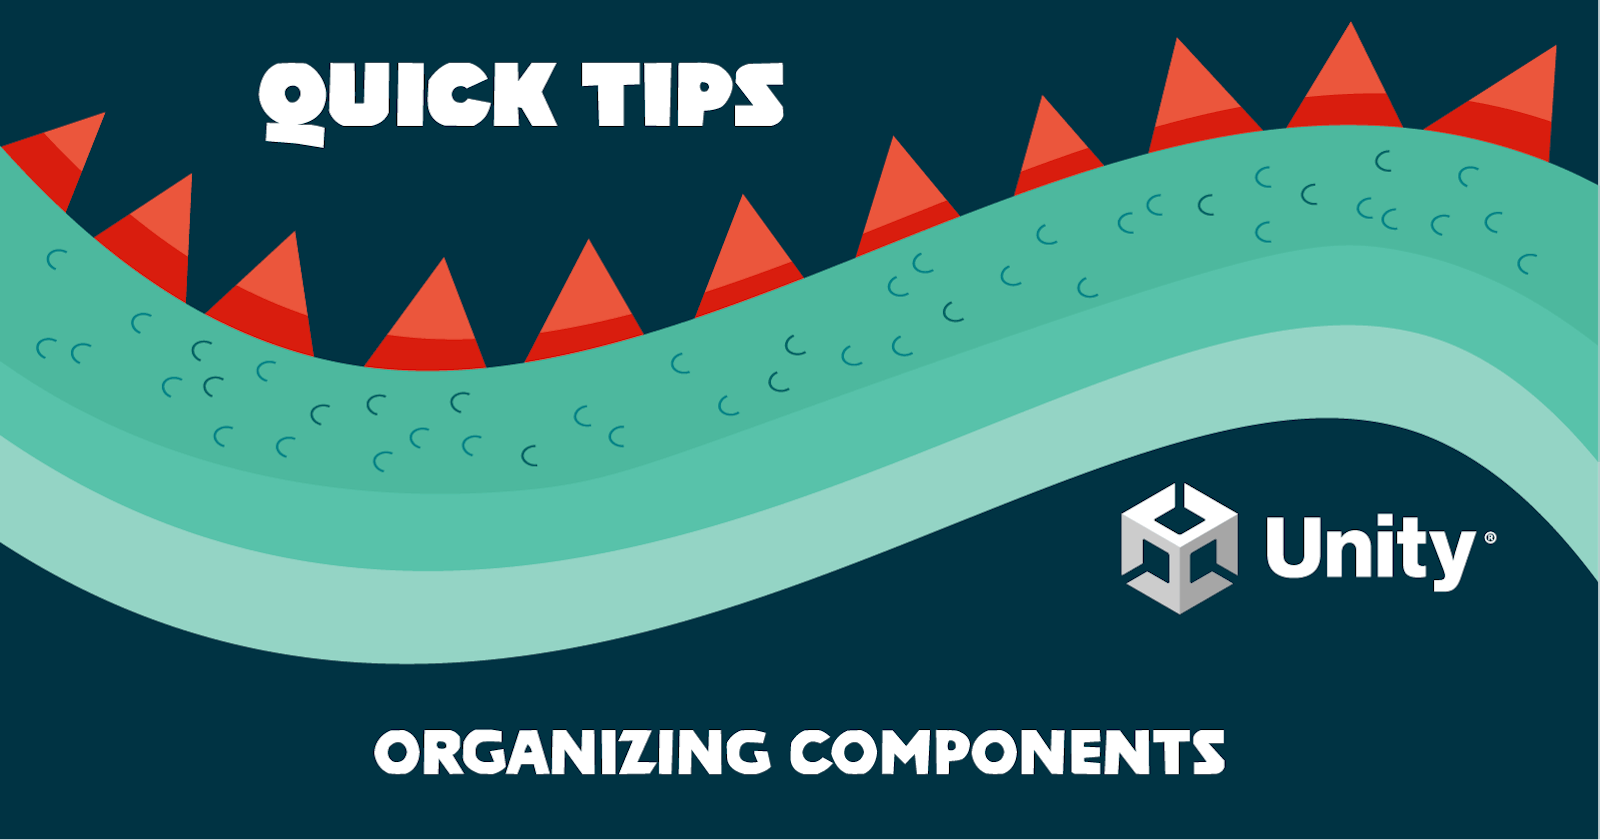 Organizing Components with AddComponentMenu in Unity